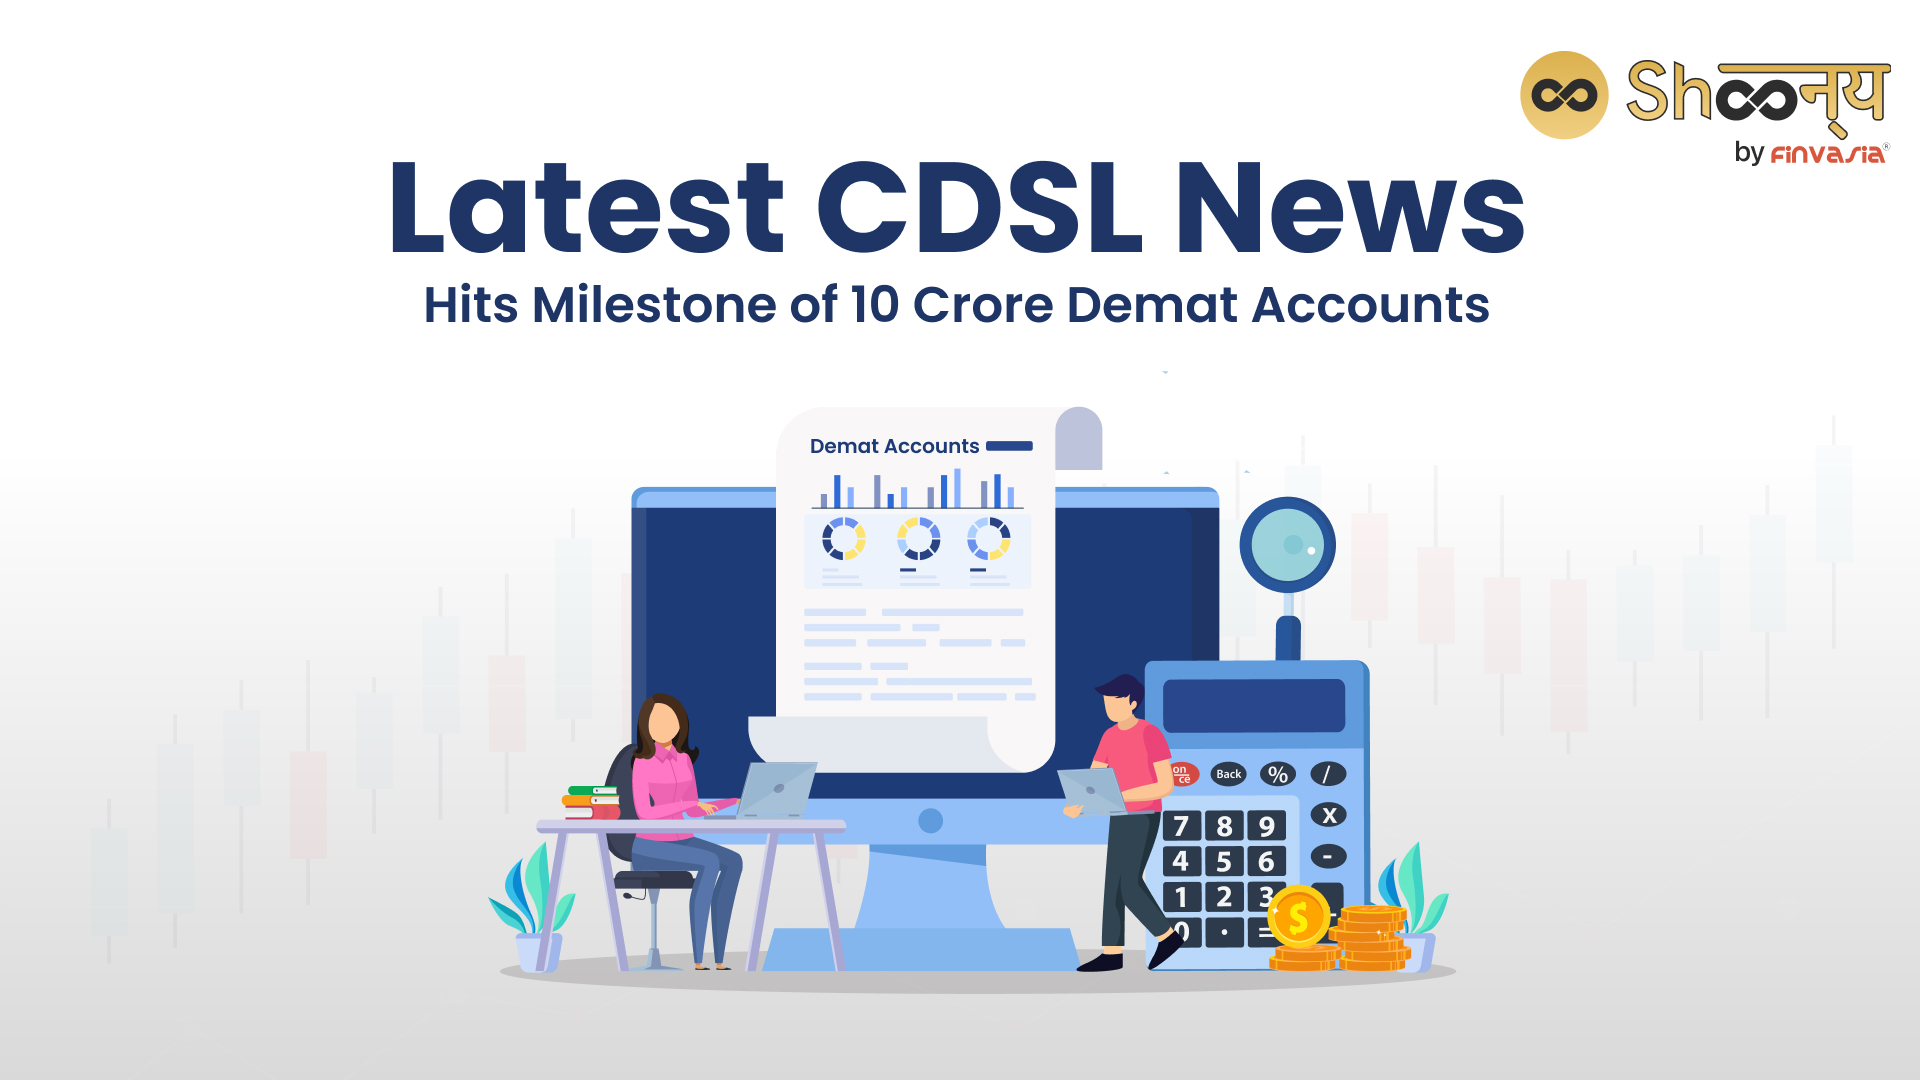 CDSL News: Surpasses 10 Crore Demat Accounts Milestone